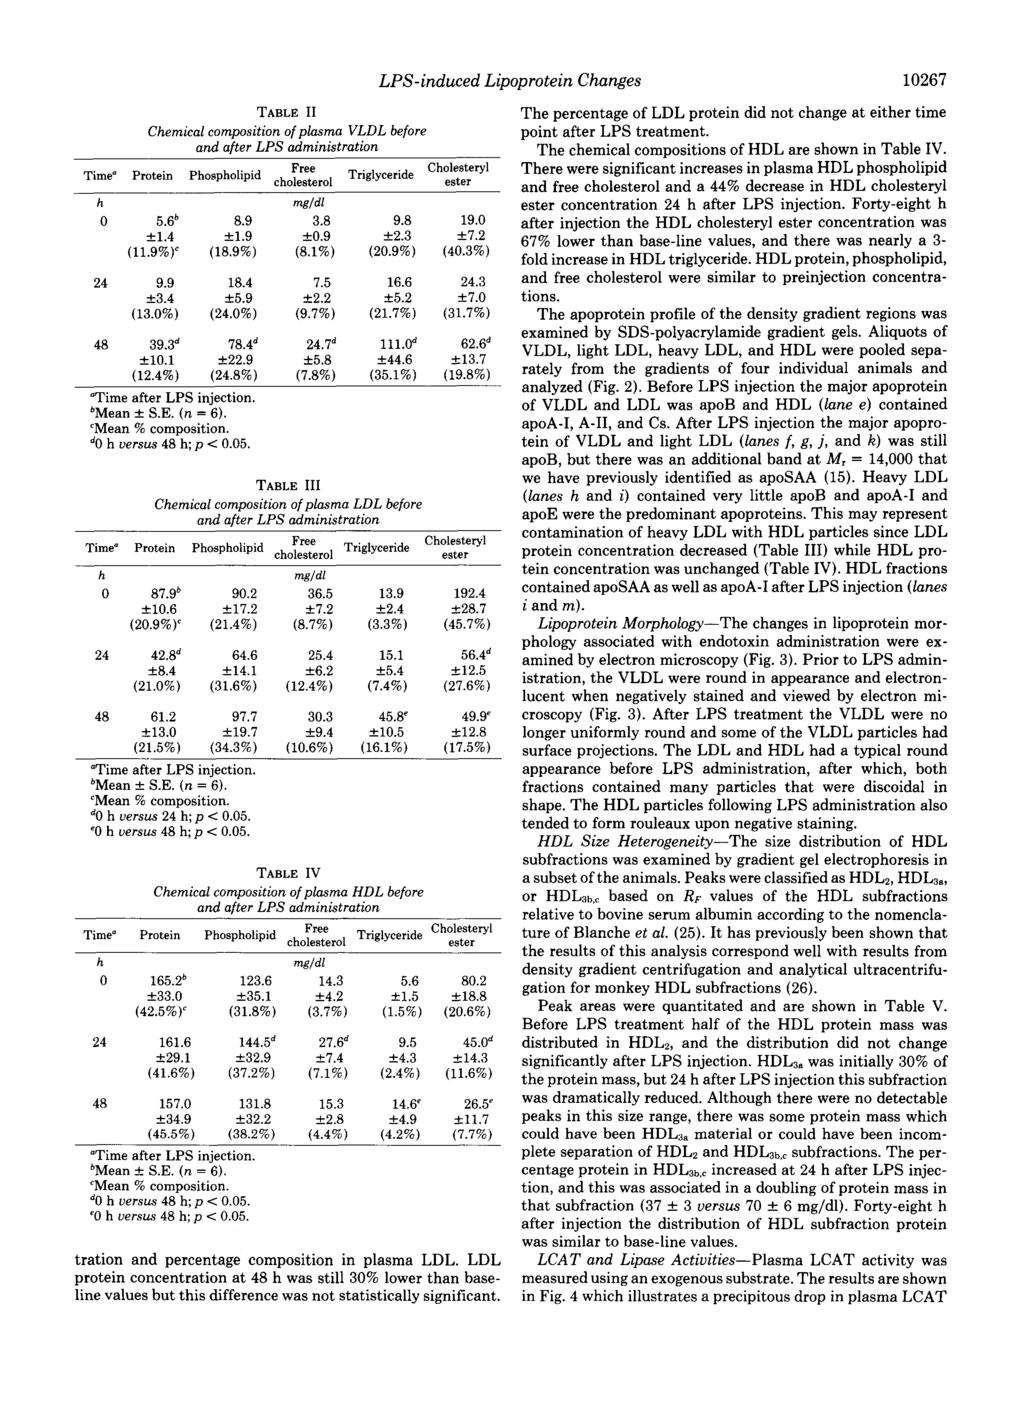 9.9 161.6 157.0 Time" TABLE 1 Cemical composition of plasma VLDL before and after LPS administration Protein mgldl 8.9 0 5.6* k1.9 k1.4 ko.9 k2.3 (11.9%)' (18.9%) (8.1%) (20.9%) k5.2 k3.4 f2.2 k5.